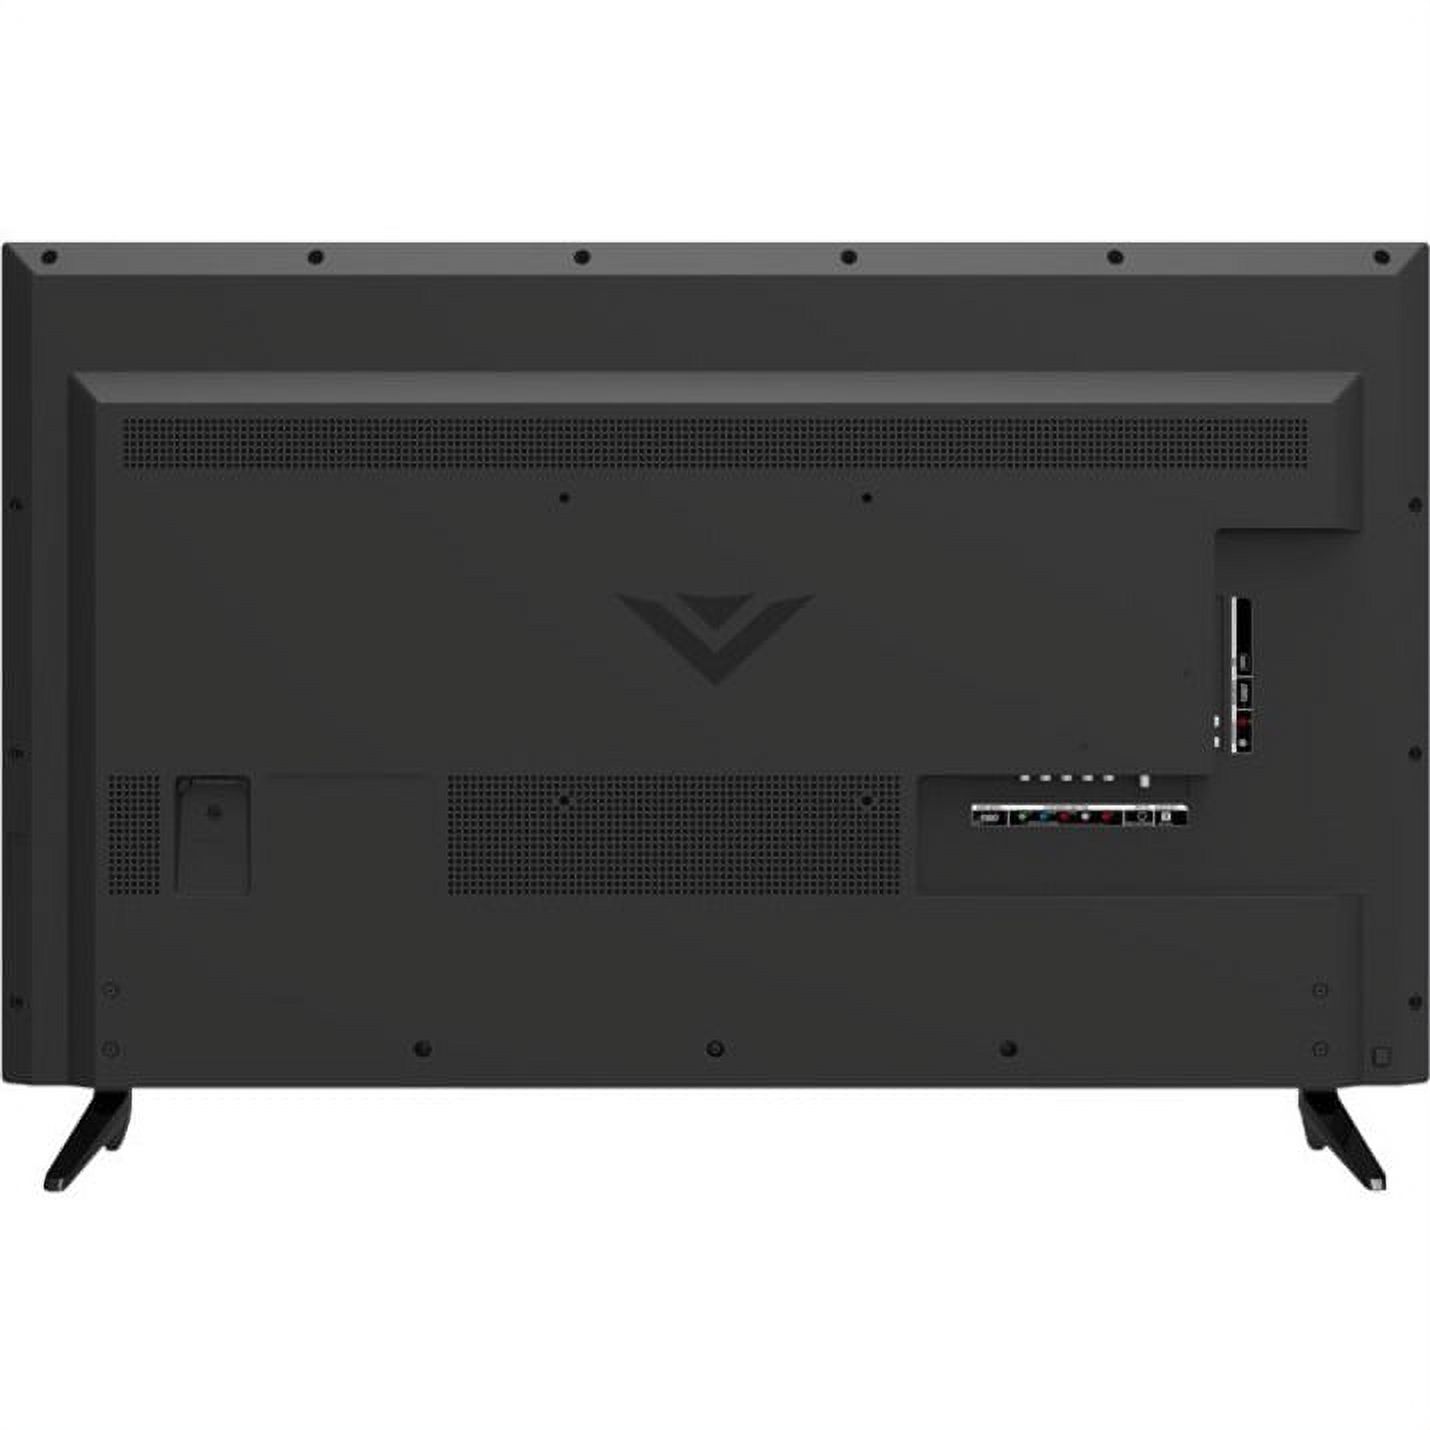 VIZIO 43" Class LED-LCD TV (D43-C1) - image 4 of 5